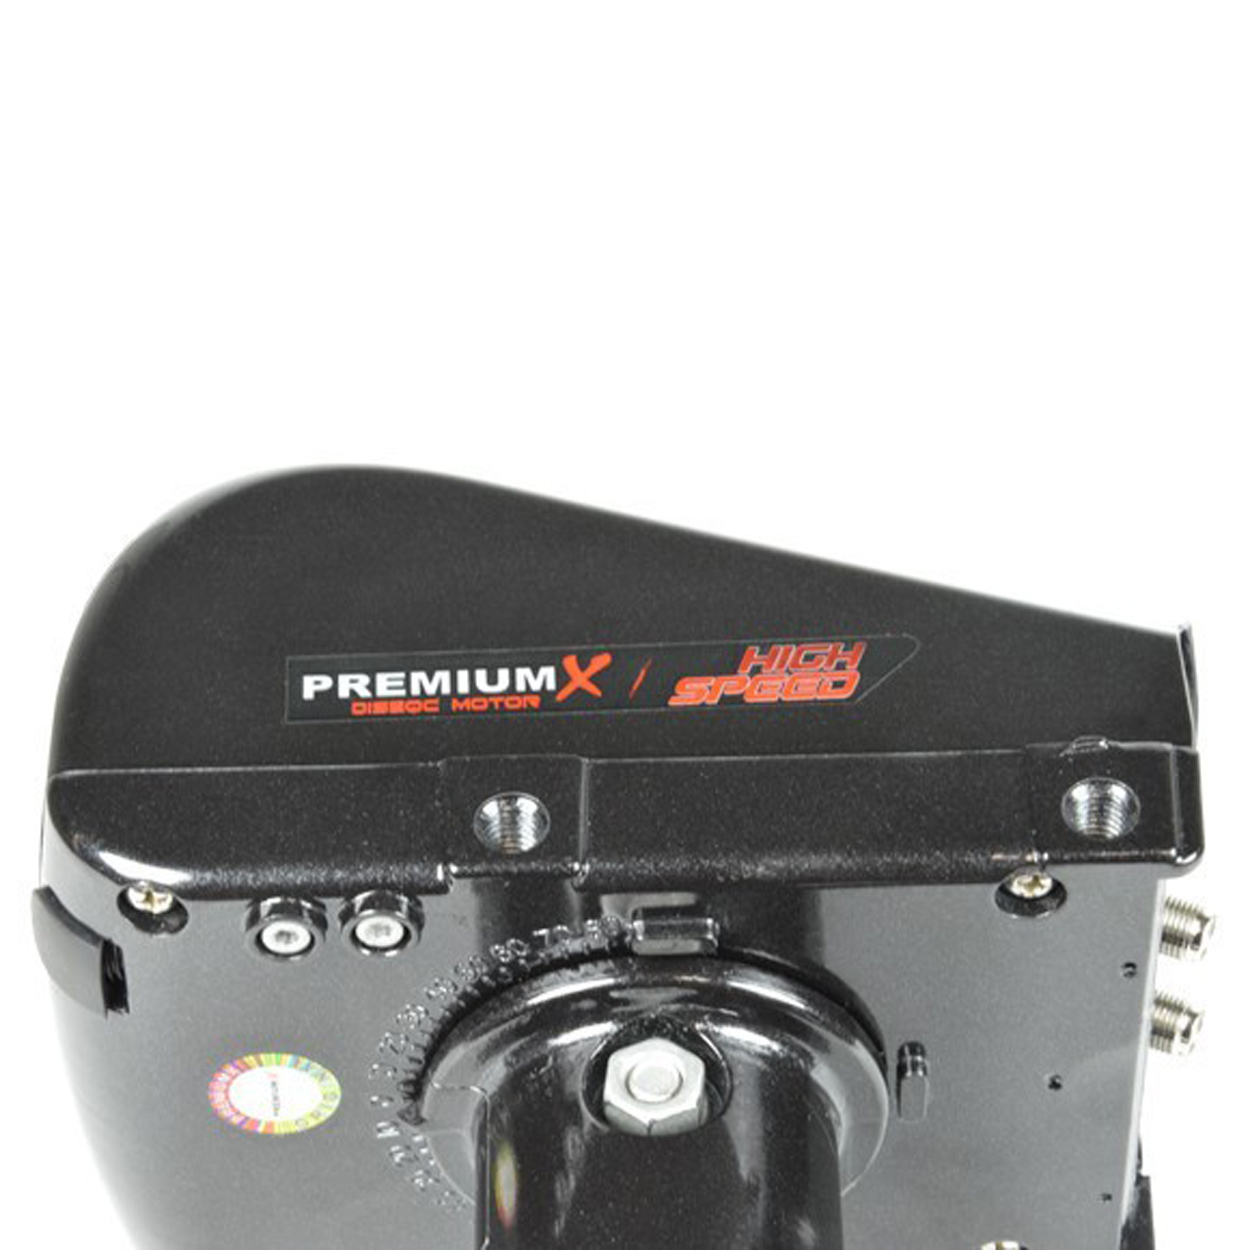 PREMIUMX Sat Motor DiSEqC Motor Motor Rotor Antennen PXM-P Antennen 1.3 SAT